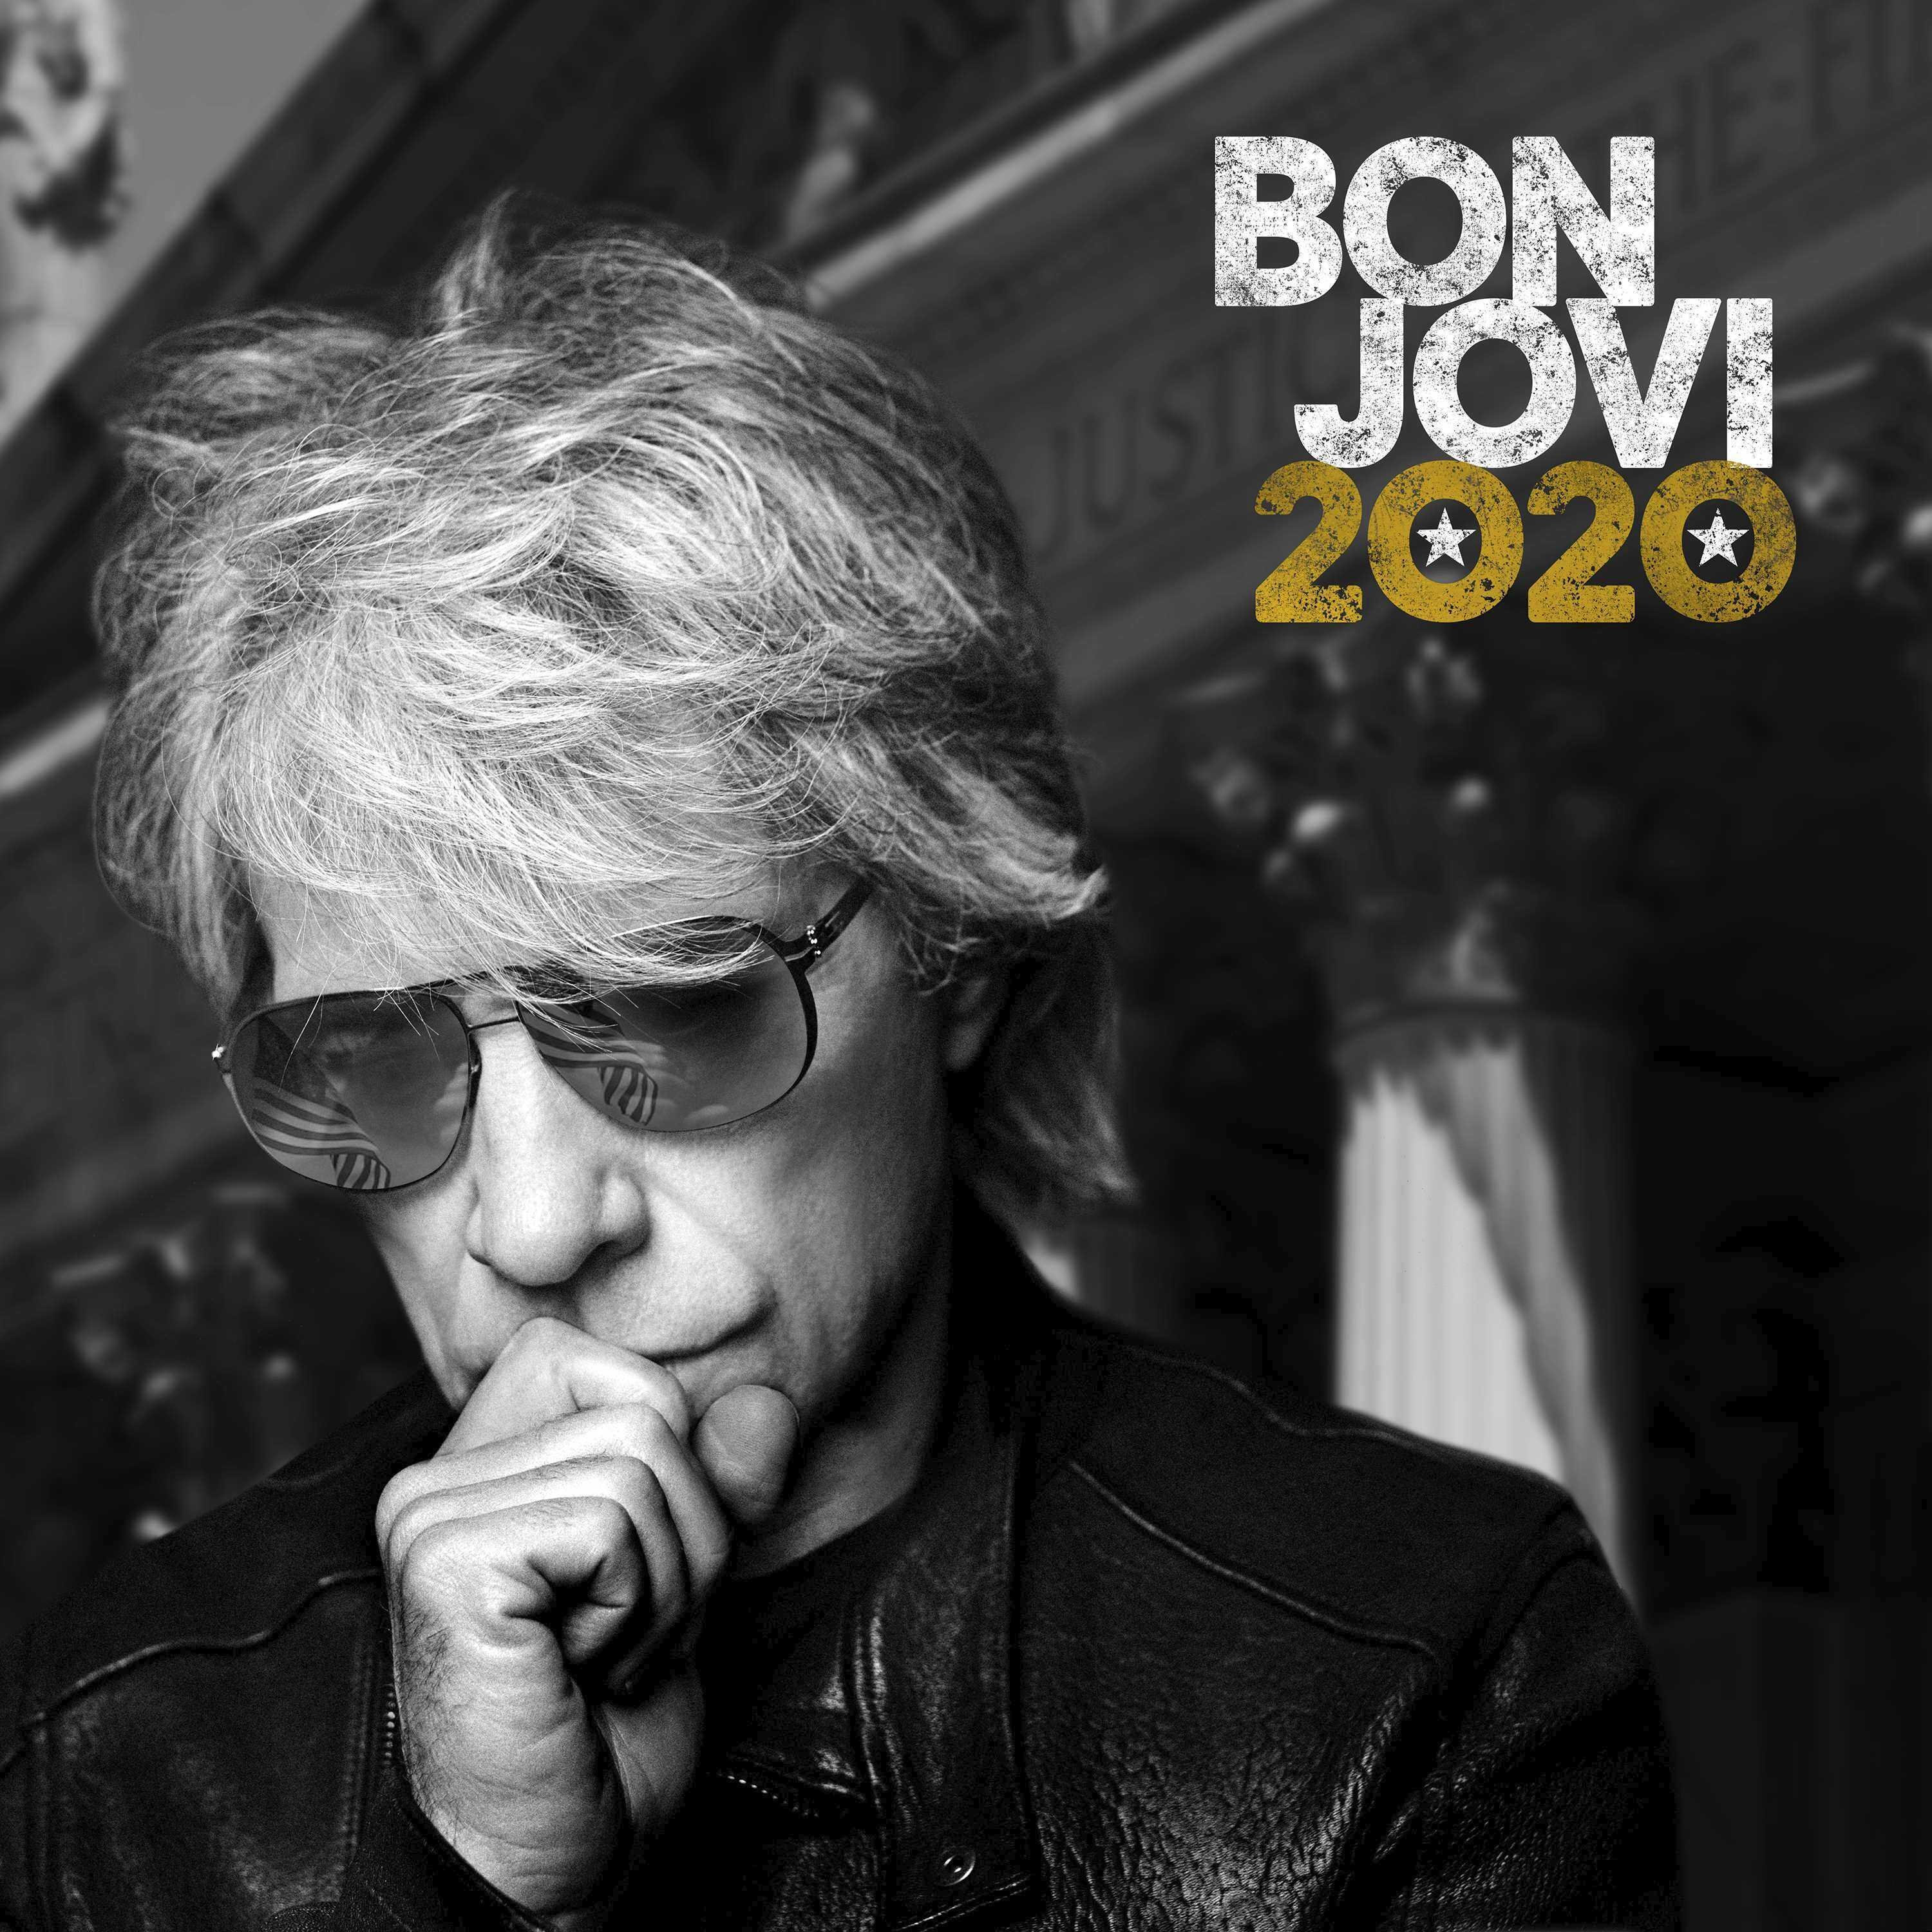 Bon Jovi : 2020